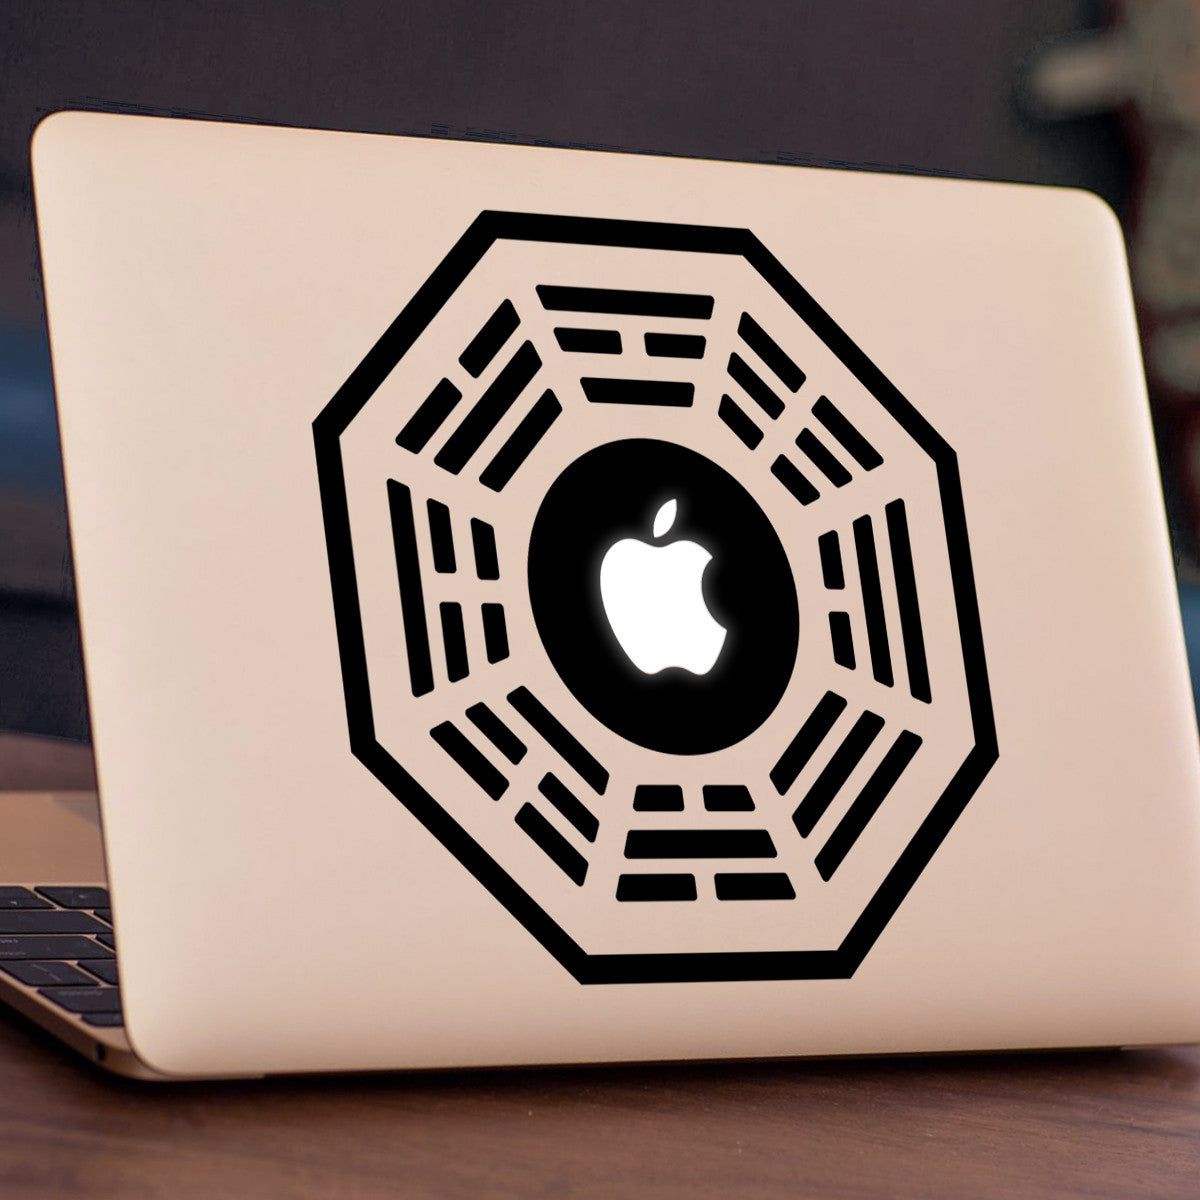 Dharma Initiative Macbook Decal